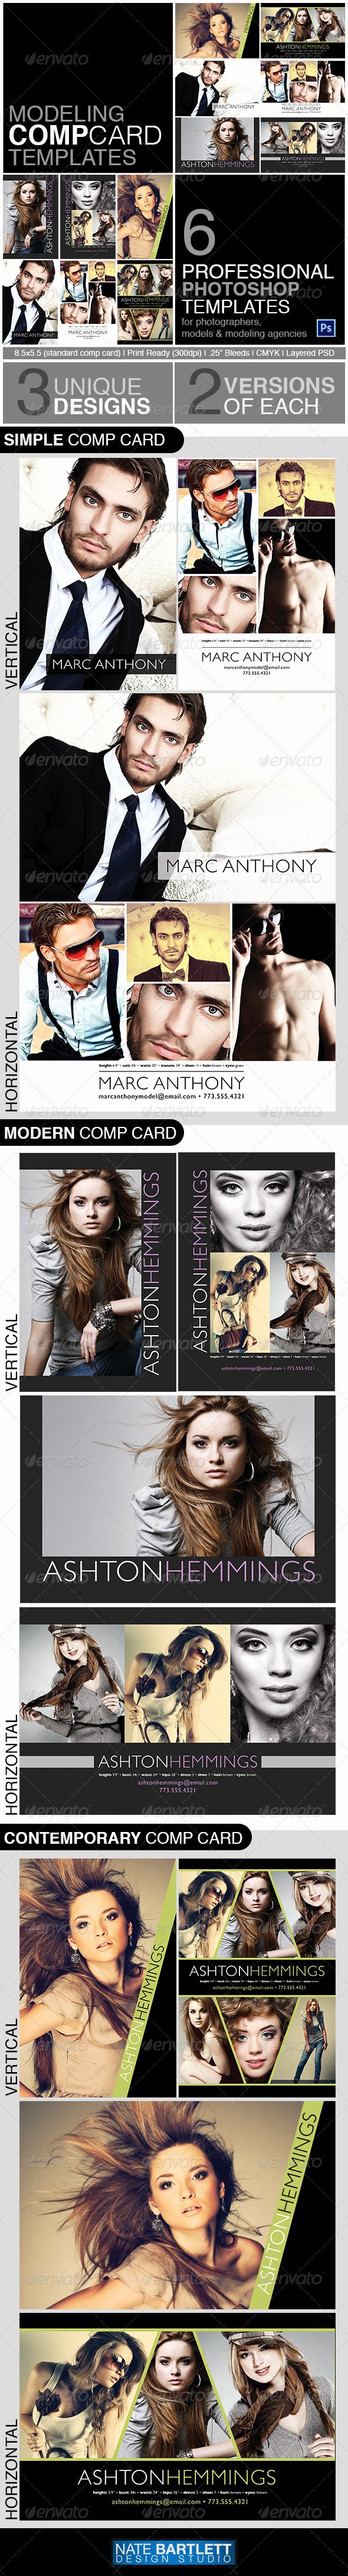 Model Comp Card Template Lovely Model P Card Template Kit by Natedilli